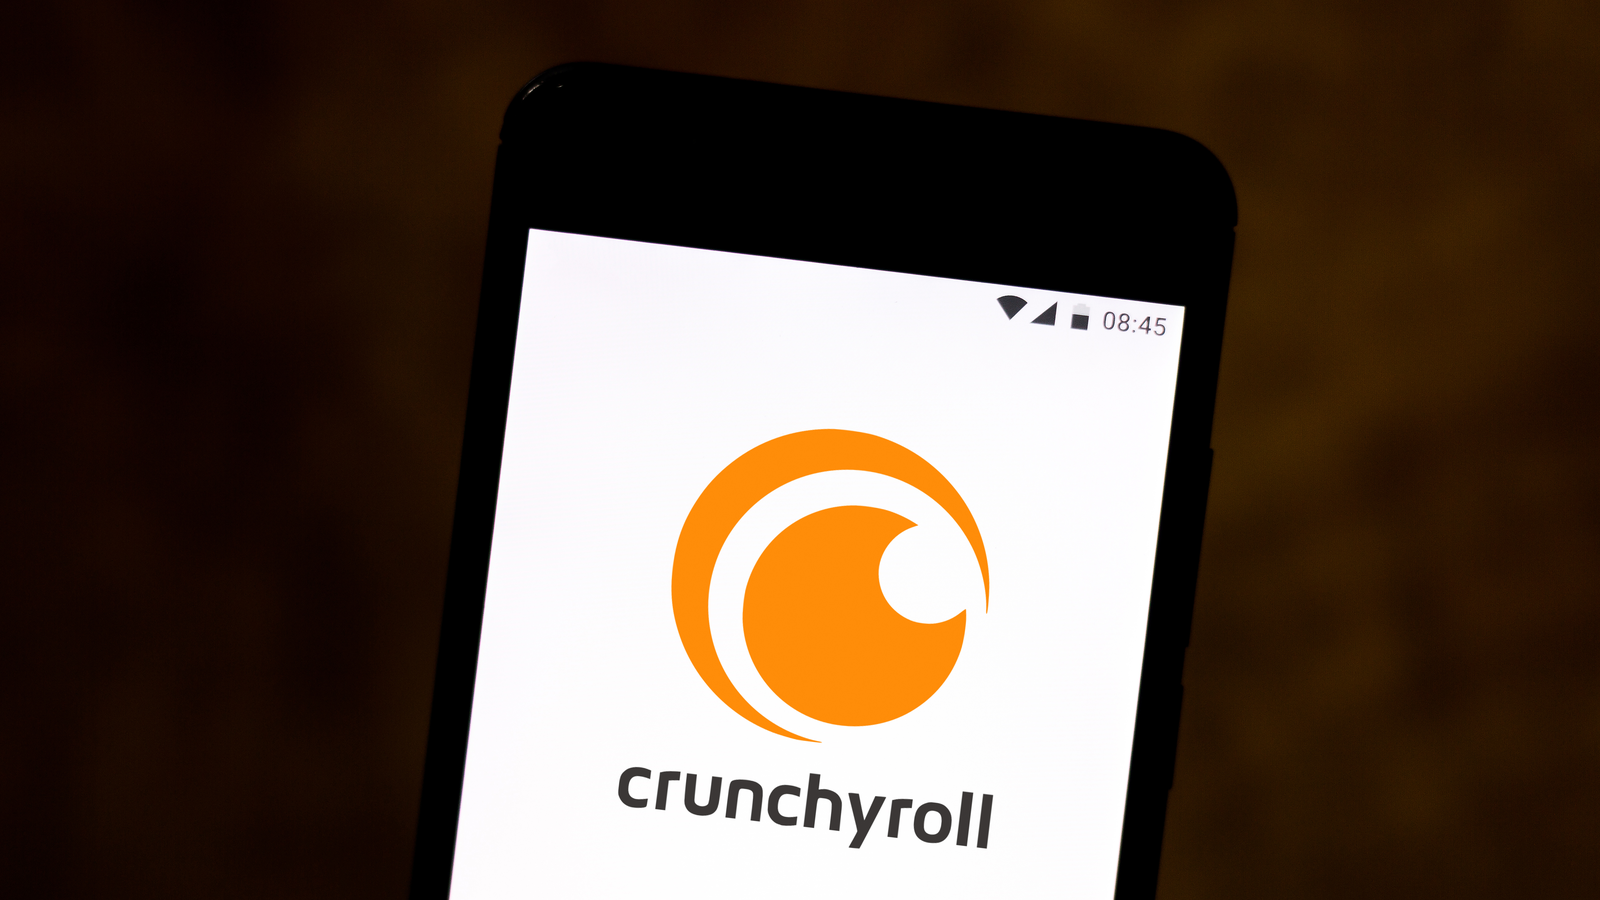 Crunchyroll logo on a phone